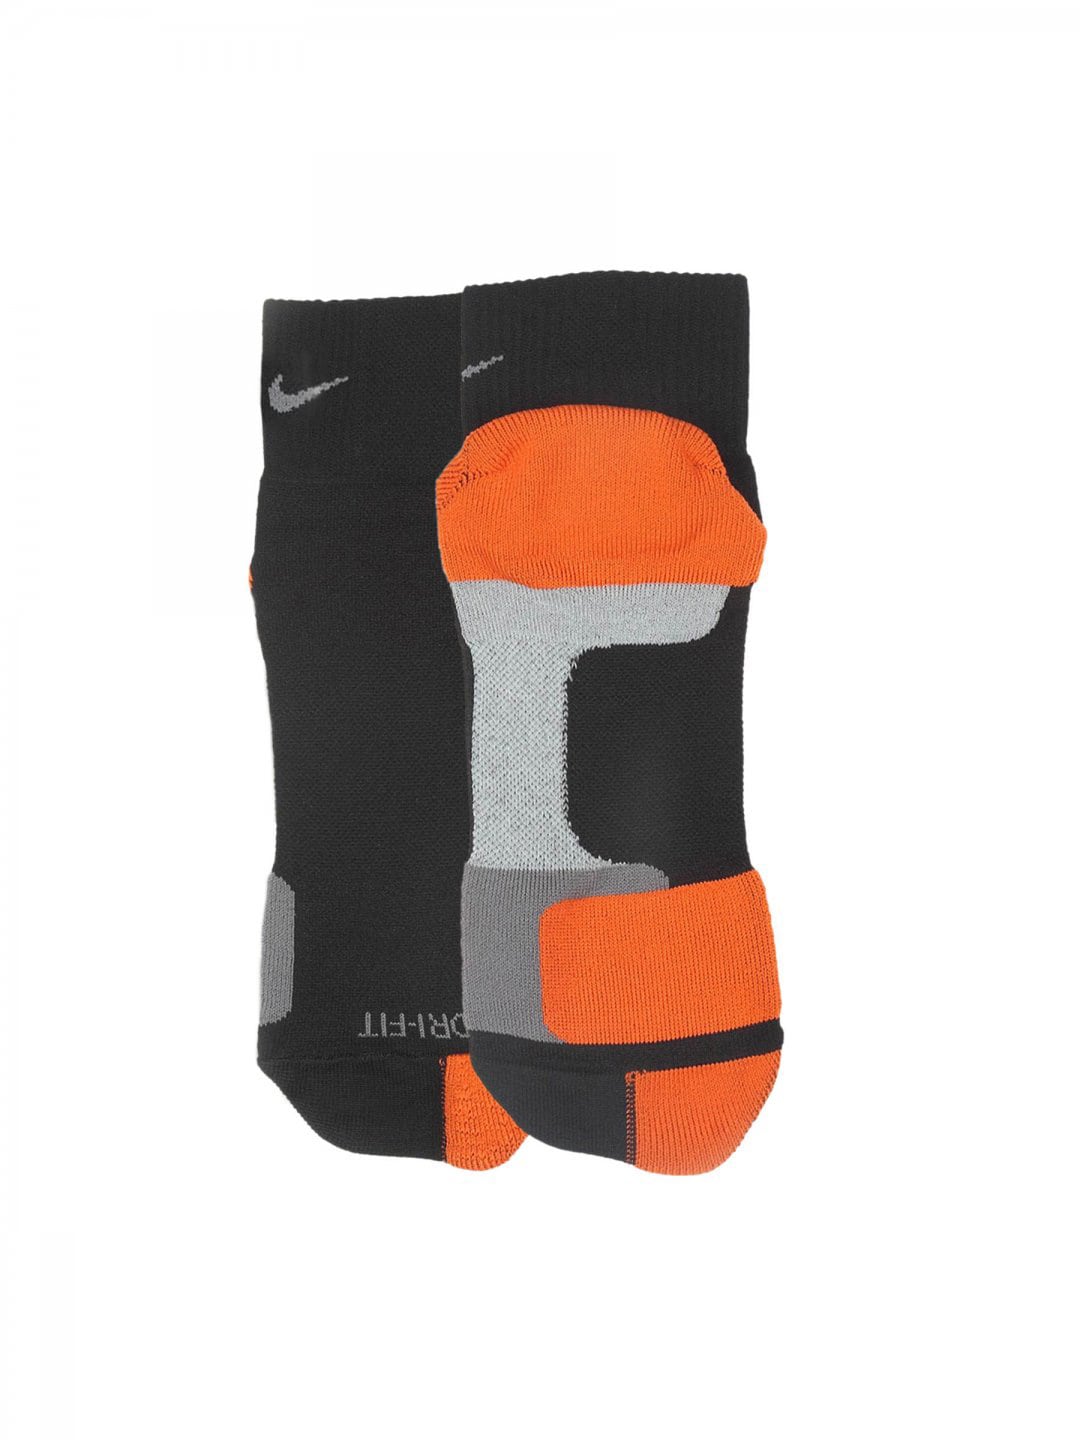 Nike Men's Elite Run Cus Black Orange Socks